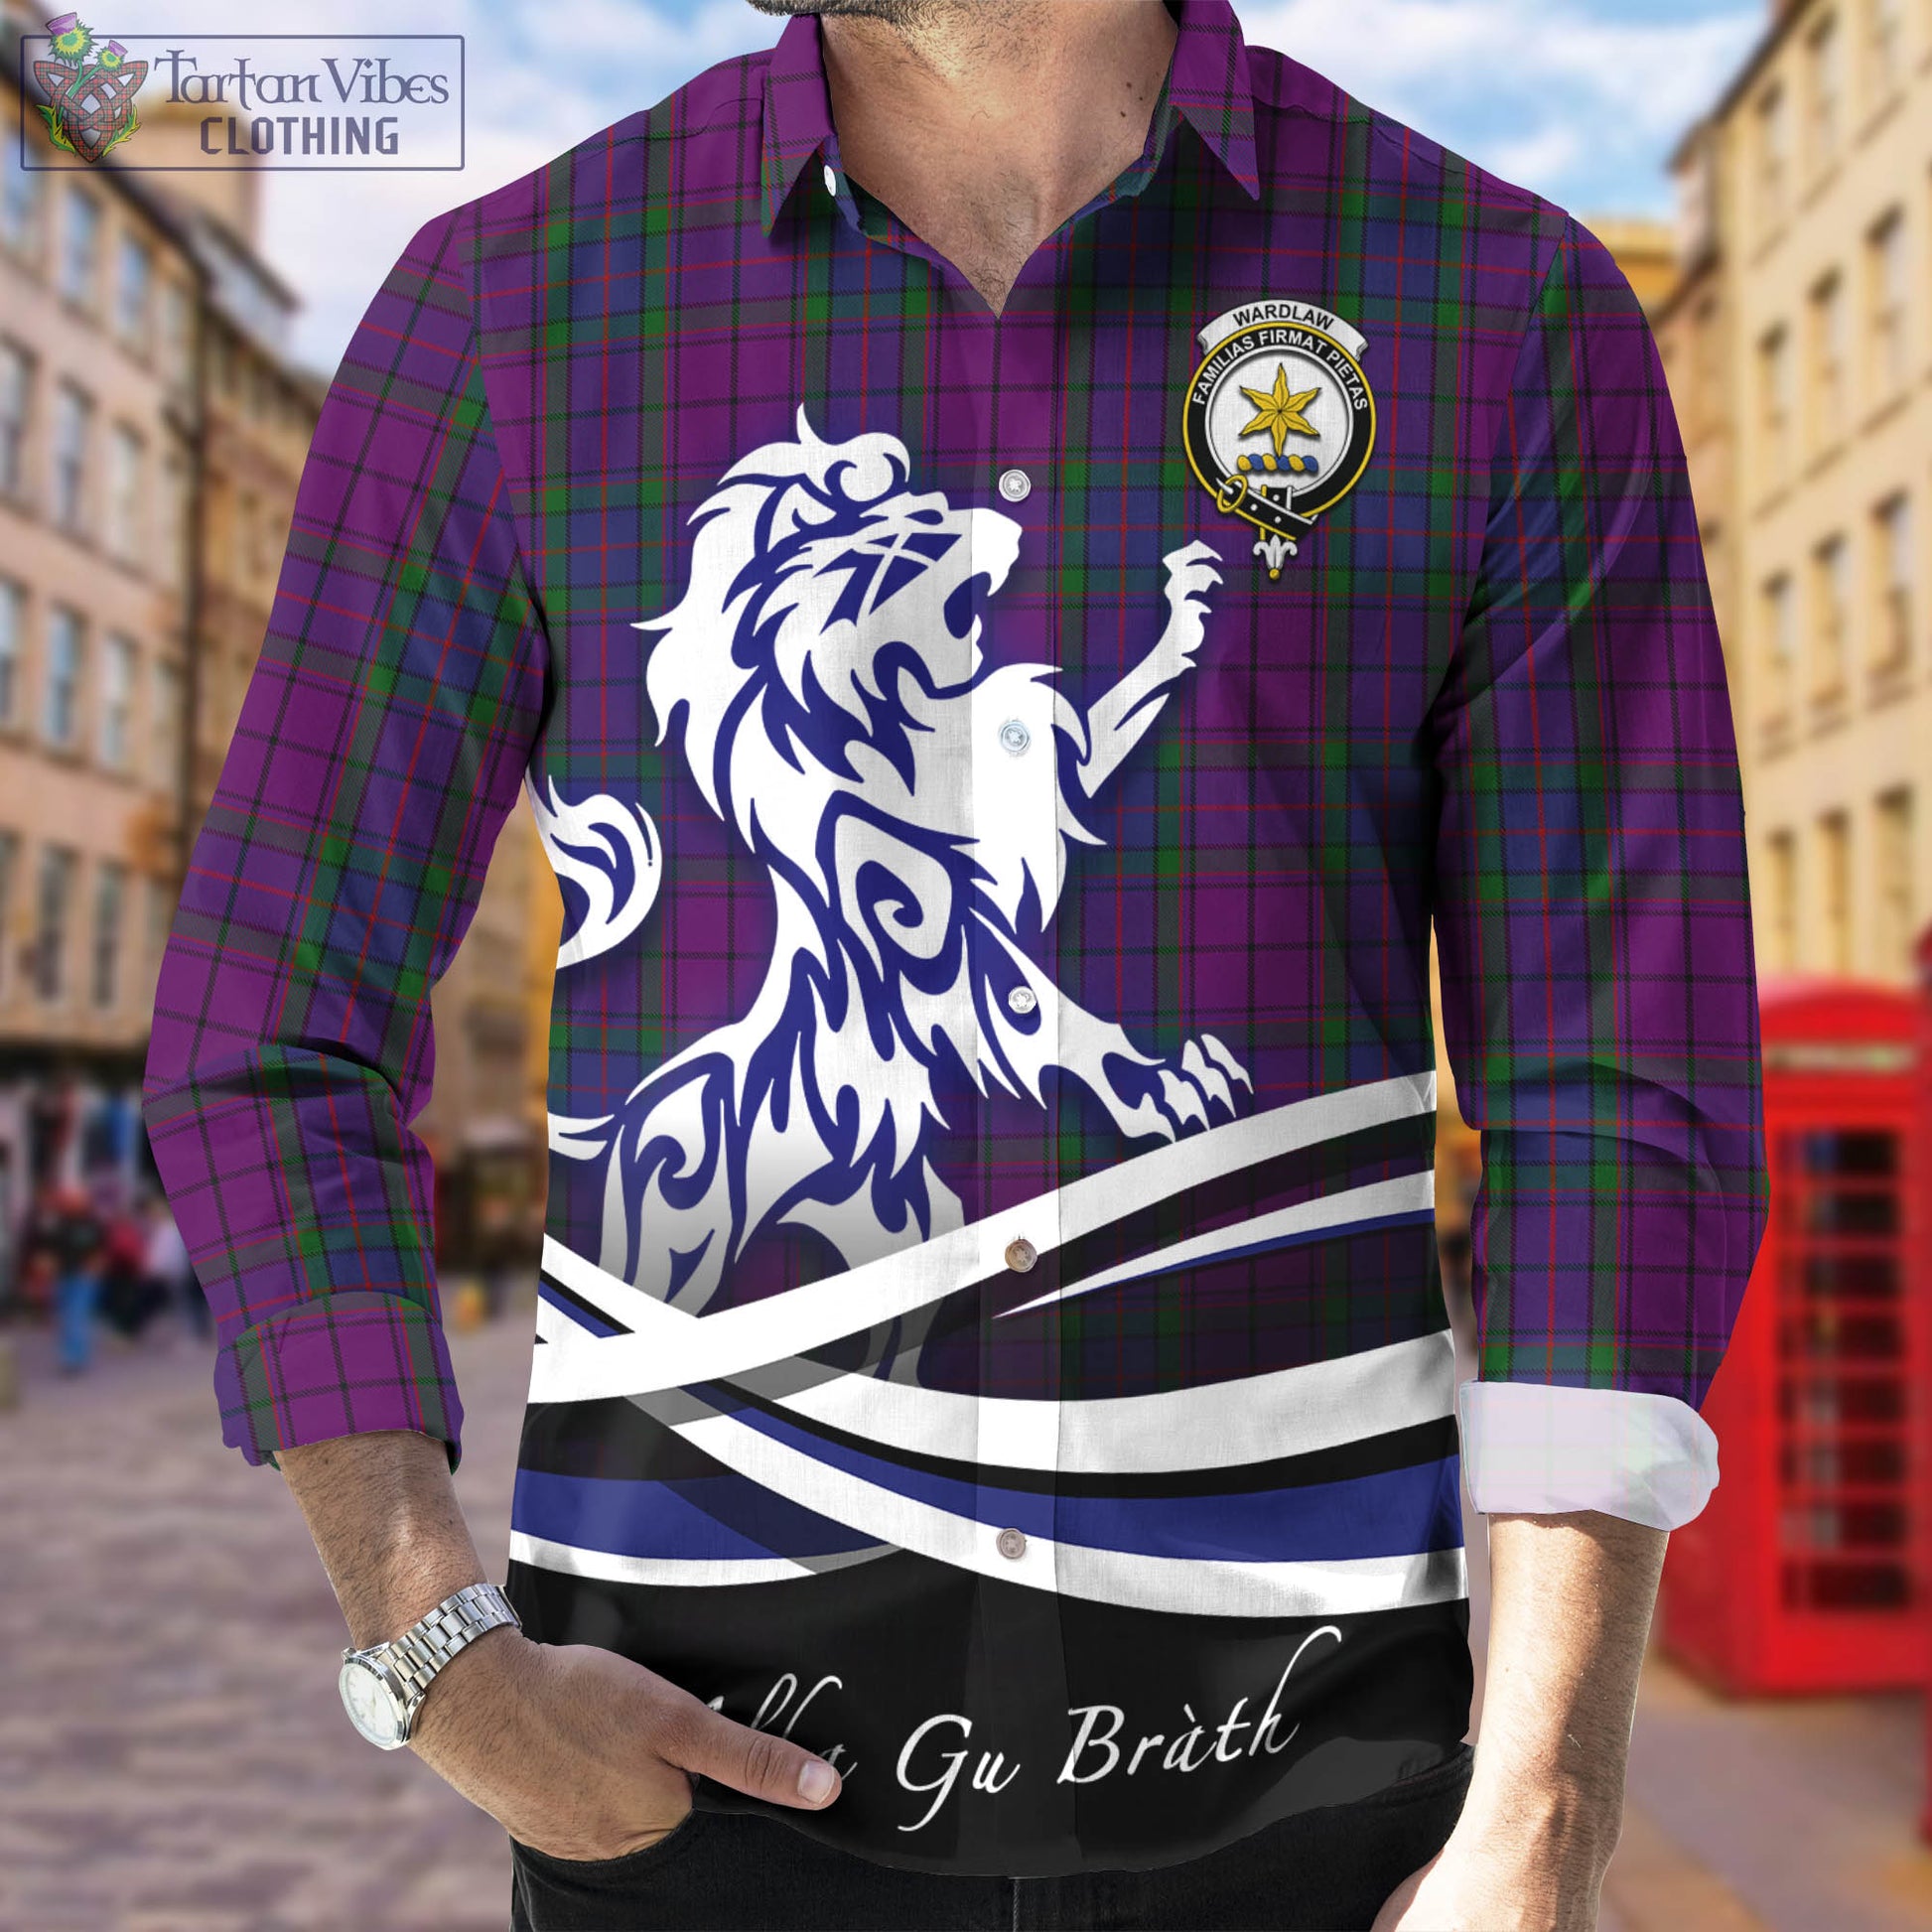 wardlaw-tartan-long-sleeve-button-up-shirt-with-alba-gu-brath-regal-lion-emblem